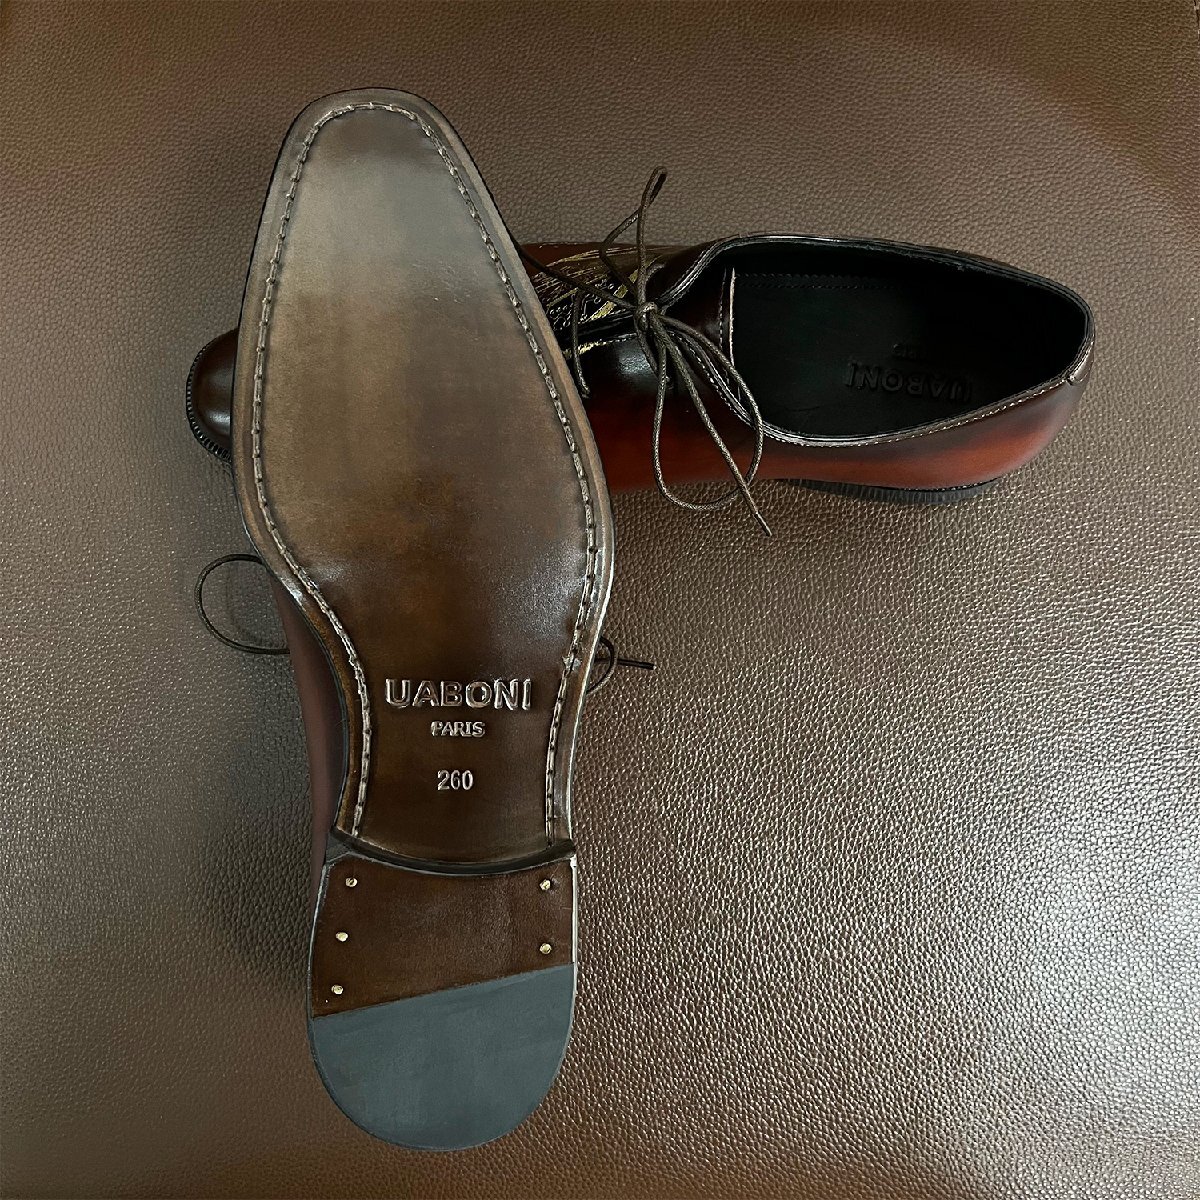  popular EU made regular price 28 ten thousand special order limited goods *UABONI* business shoes *yuaboni* high class hand made handmade hand . original leather formal gentleman 25.